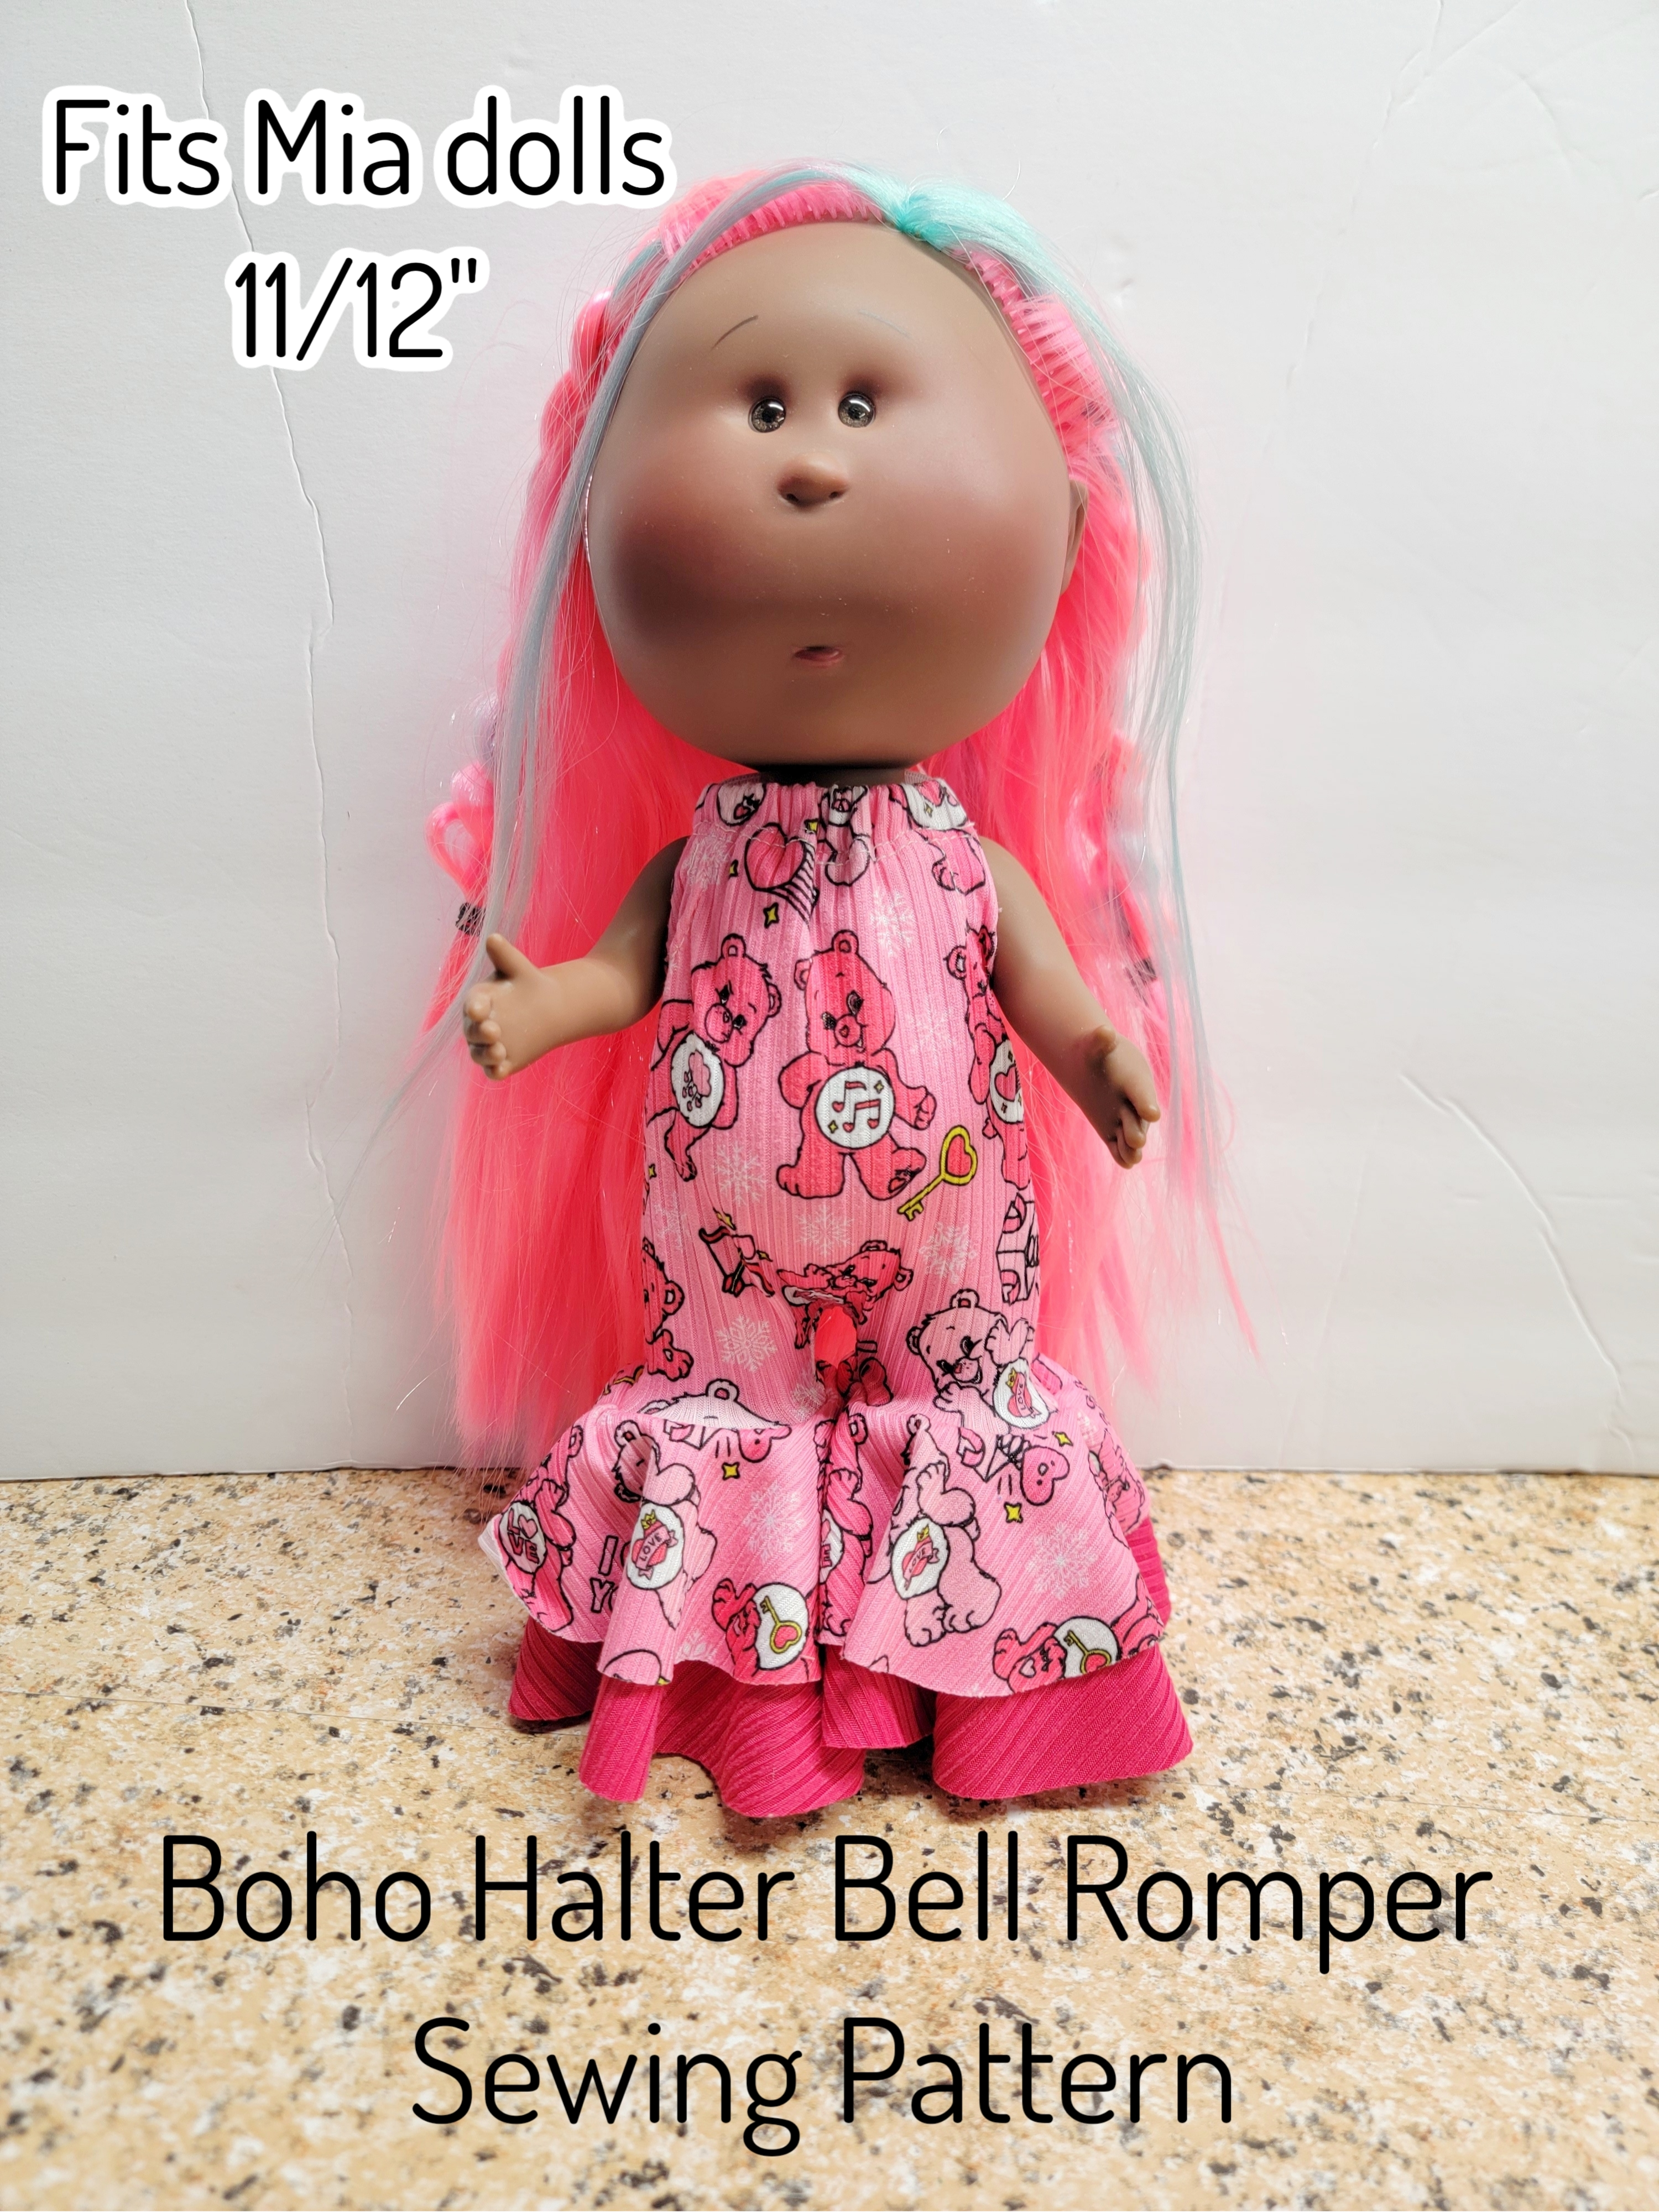 Boho Halter Bell Romper Sewing Pattern, Fits MIA DOLLS 11-12"